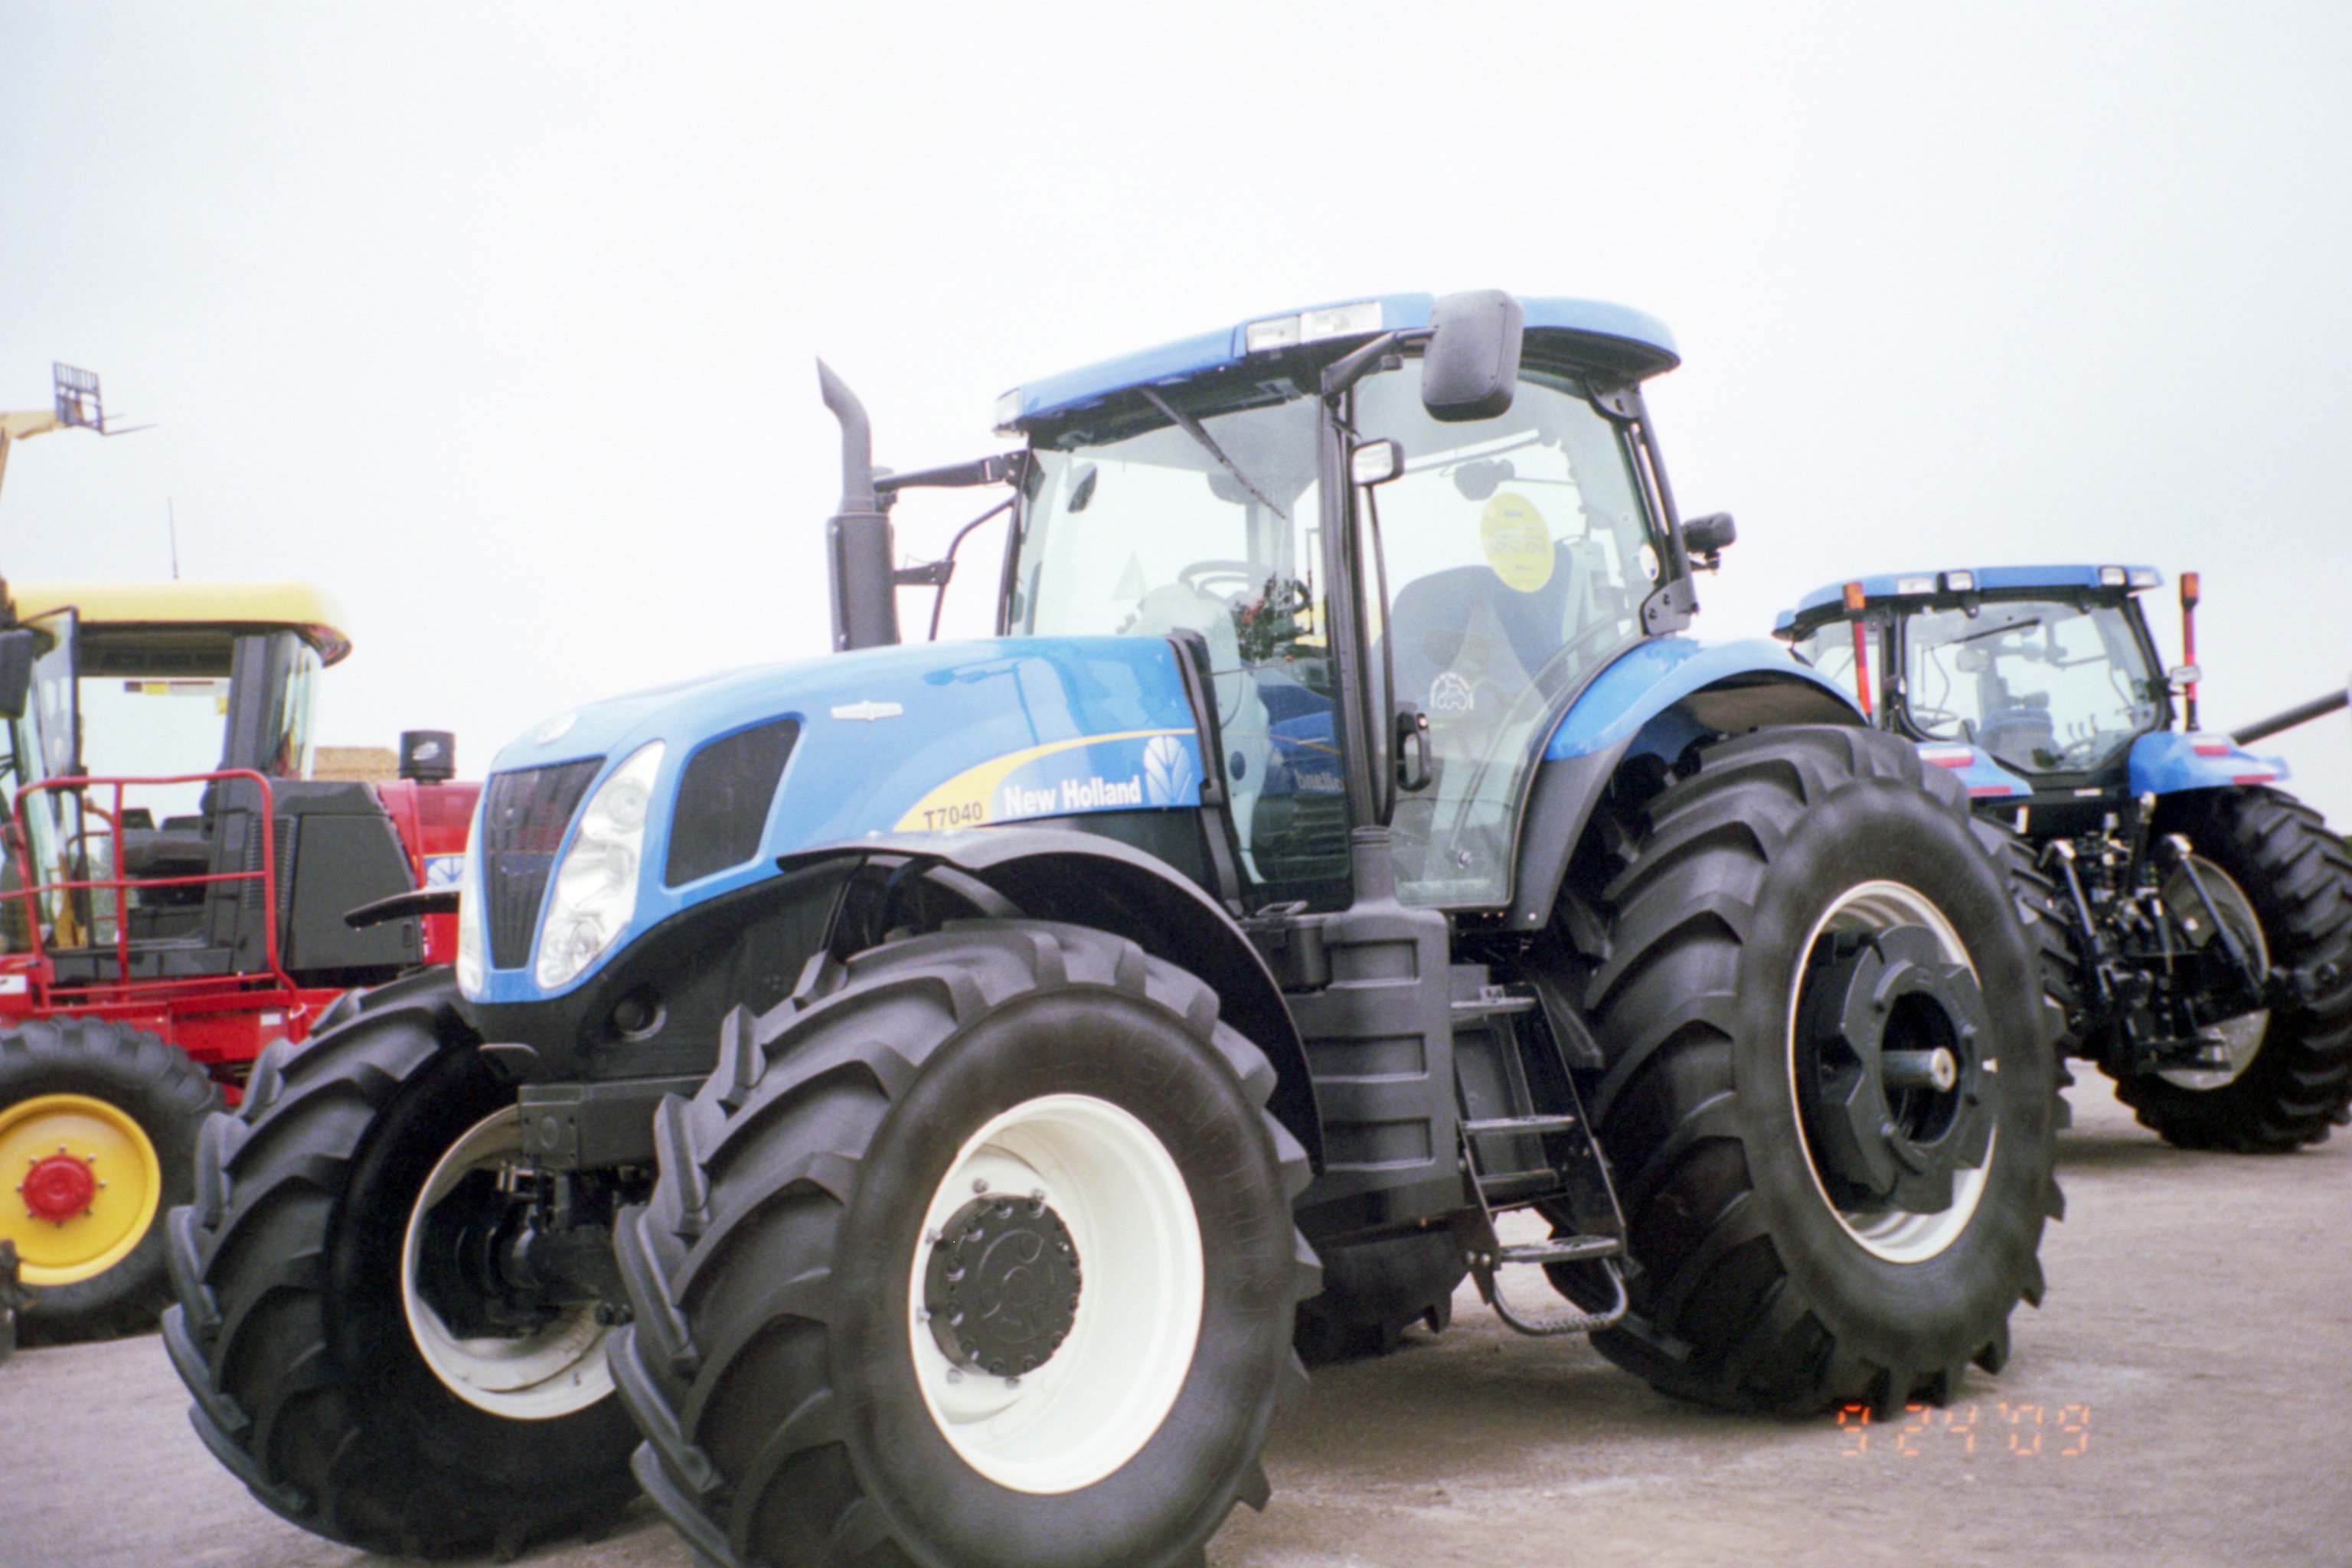 New Holland T7060 tractor | New Holland farm equipment | Pinterest